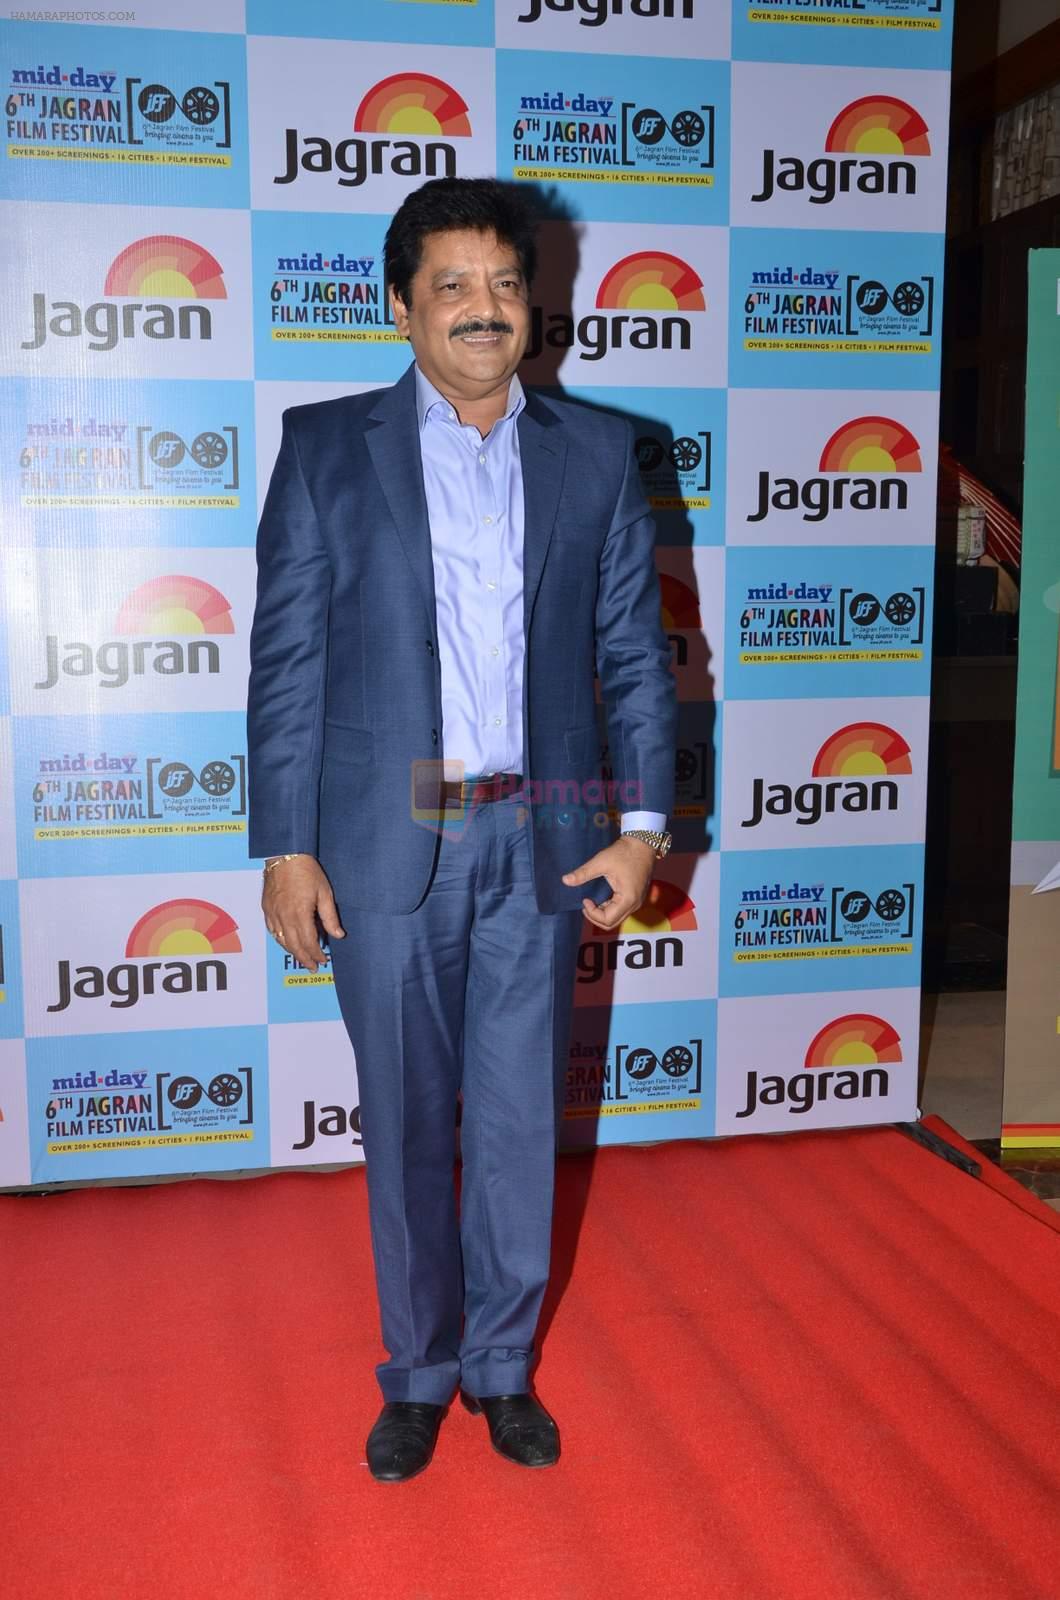 at Jagran fest closing ceremony in J W Marriott on 4th Oct 2015